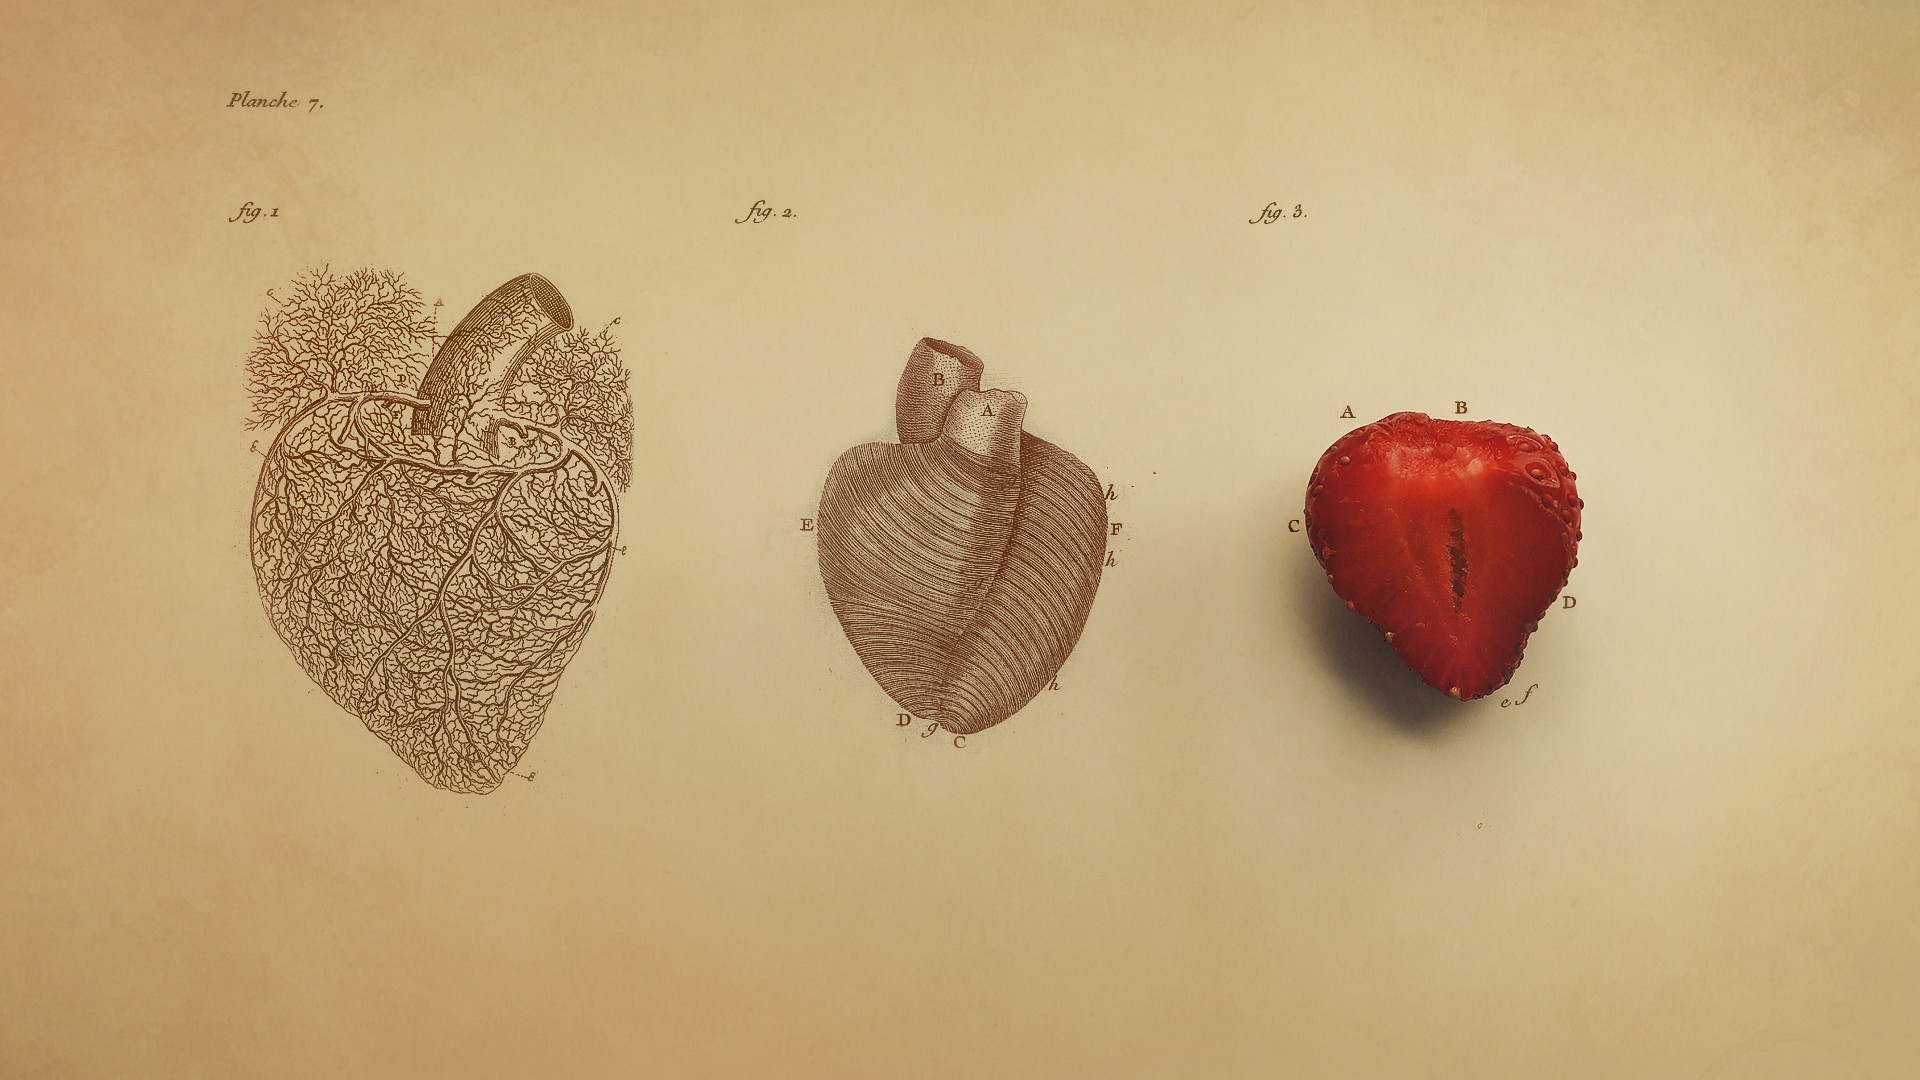 General 1920x1080 heart digital art simple background organs drawing vintage veins text fruit strawberries biology  medicine beige beige background artwork